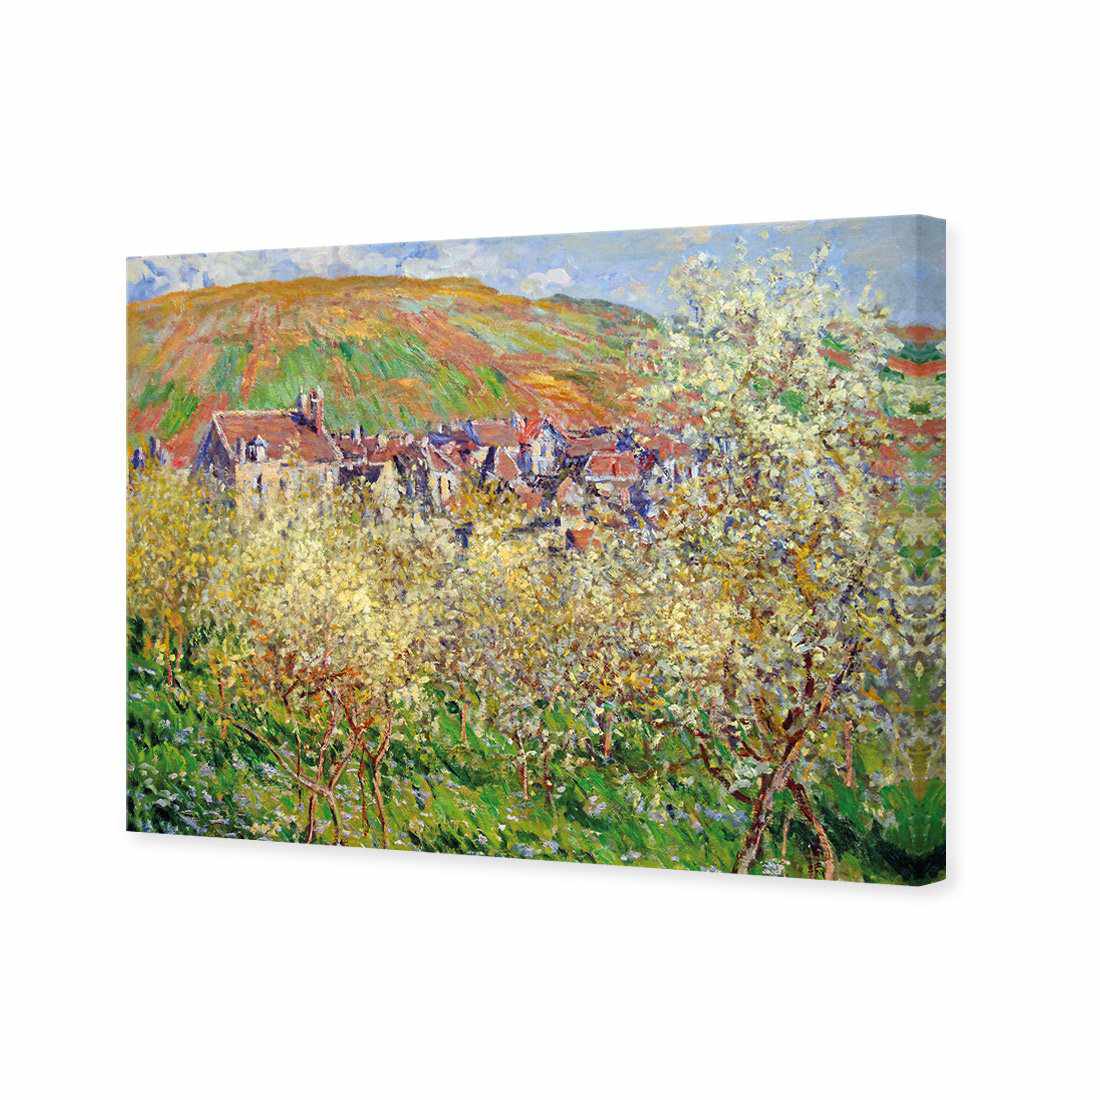 Plum Trees in Blossom - Monet Canvas Art-Canvas-Wall Art Designs-45x30cm-Canvas - No Frame-Wall Art Designs